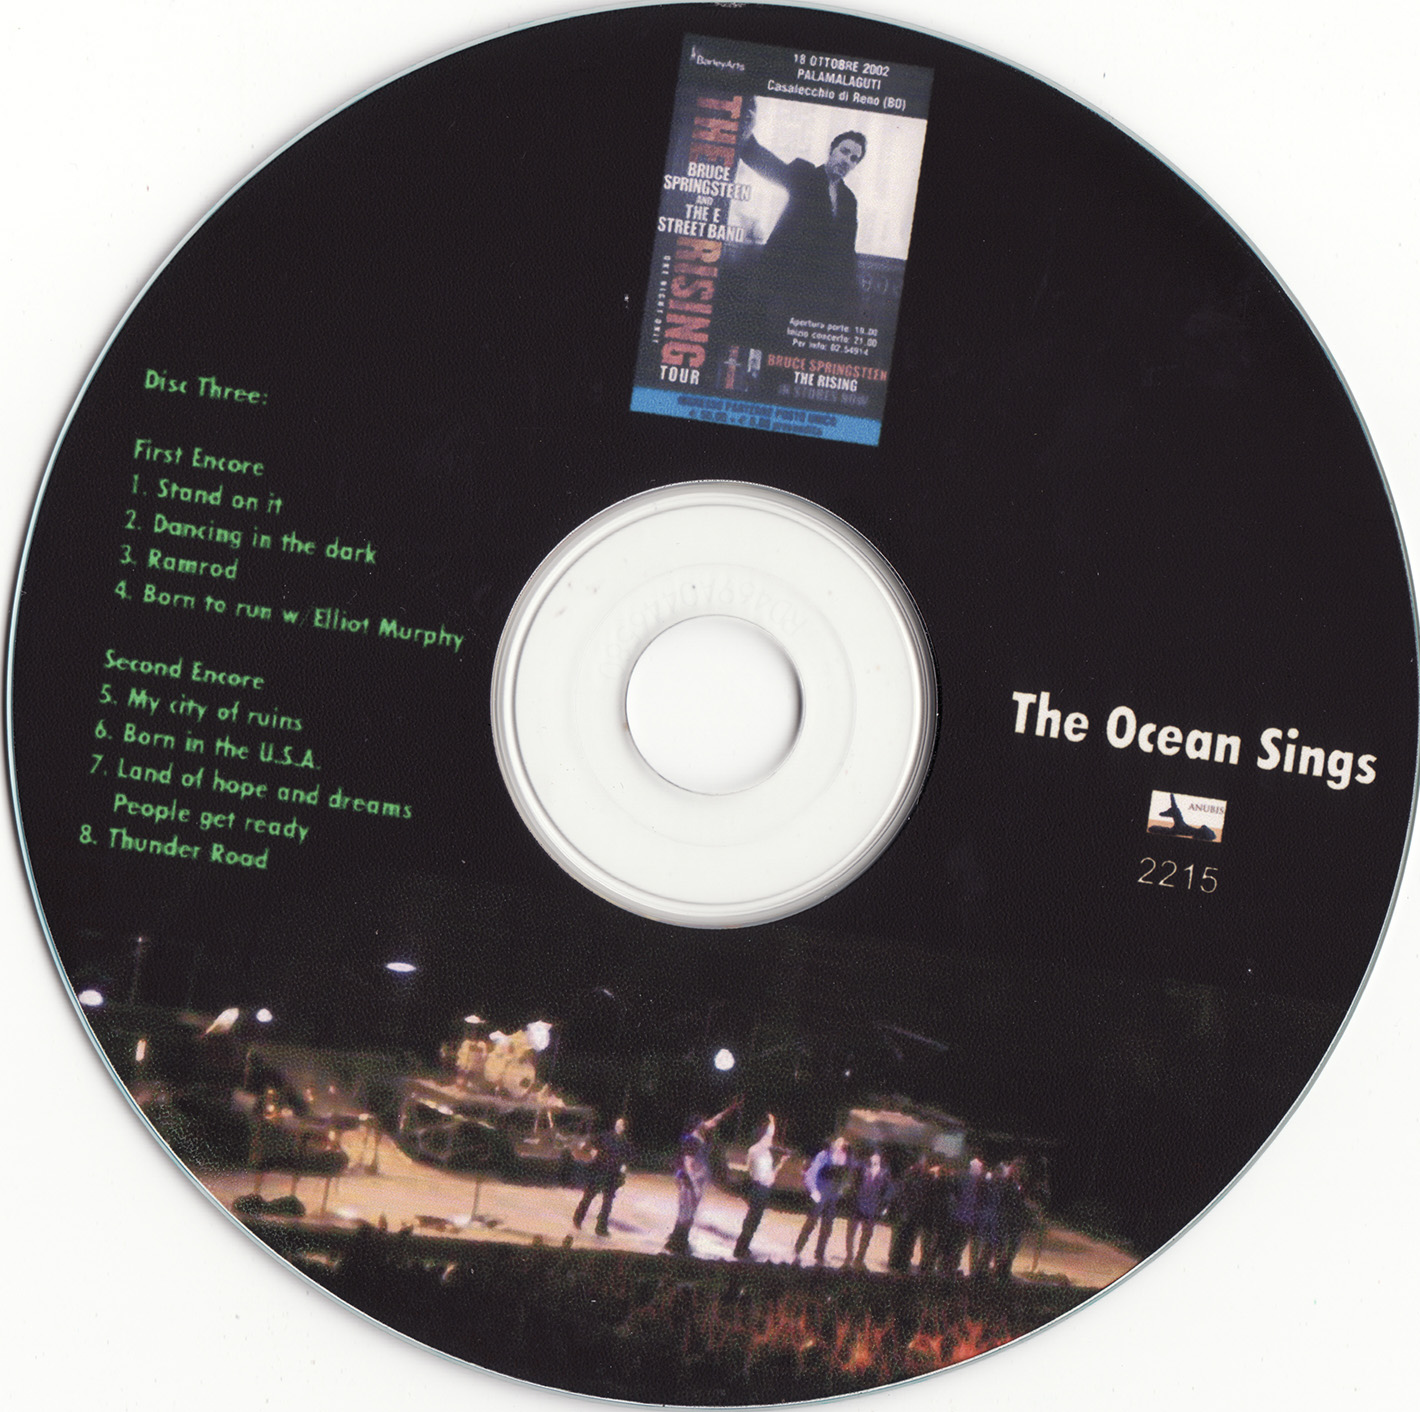 Bruce Springsteen Bootlegs: The Ocean Sings [Anubis Records] | 18 